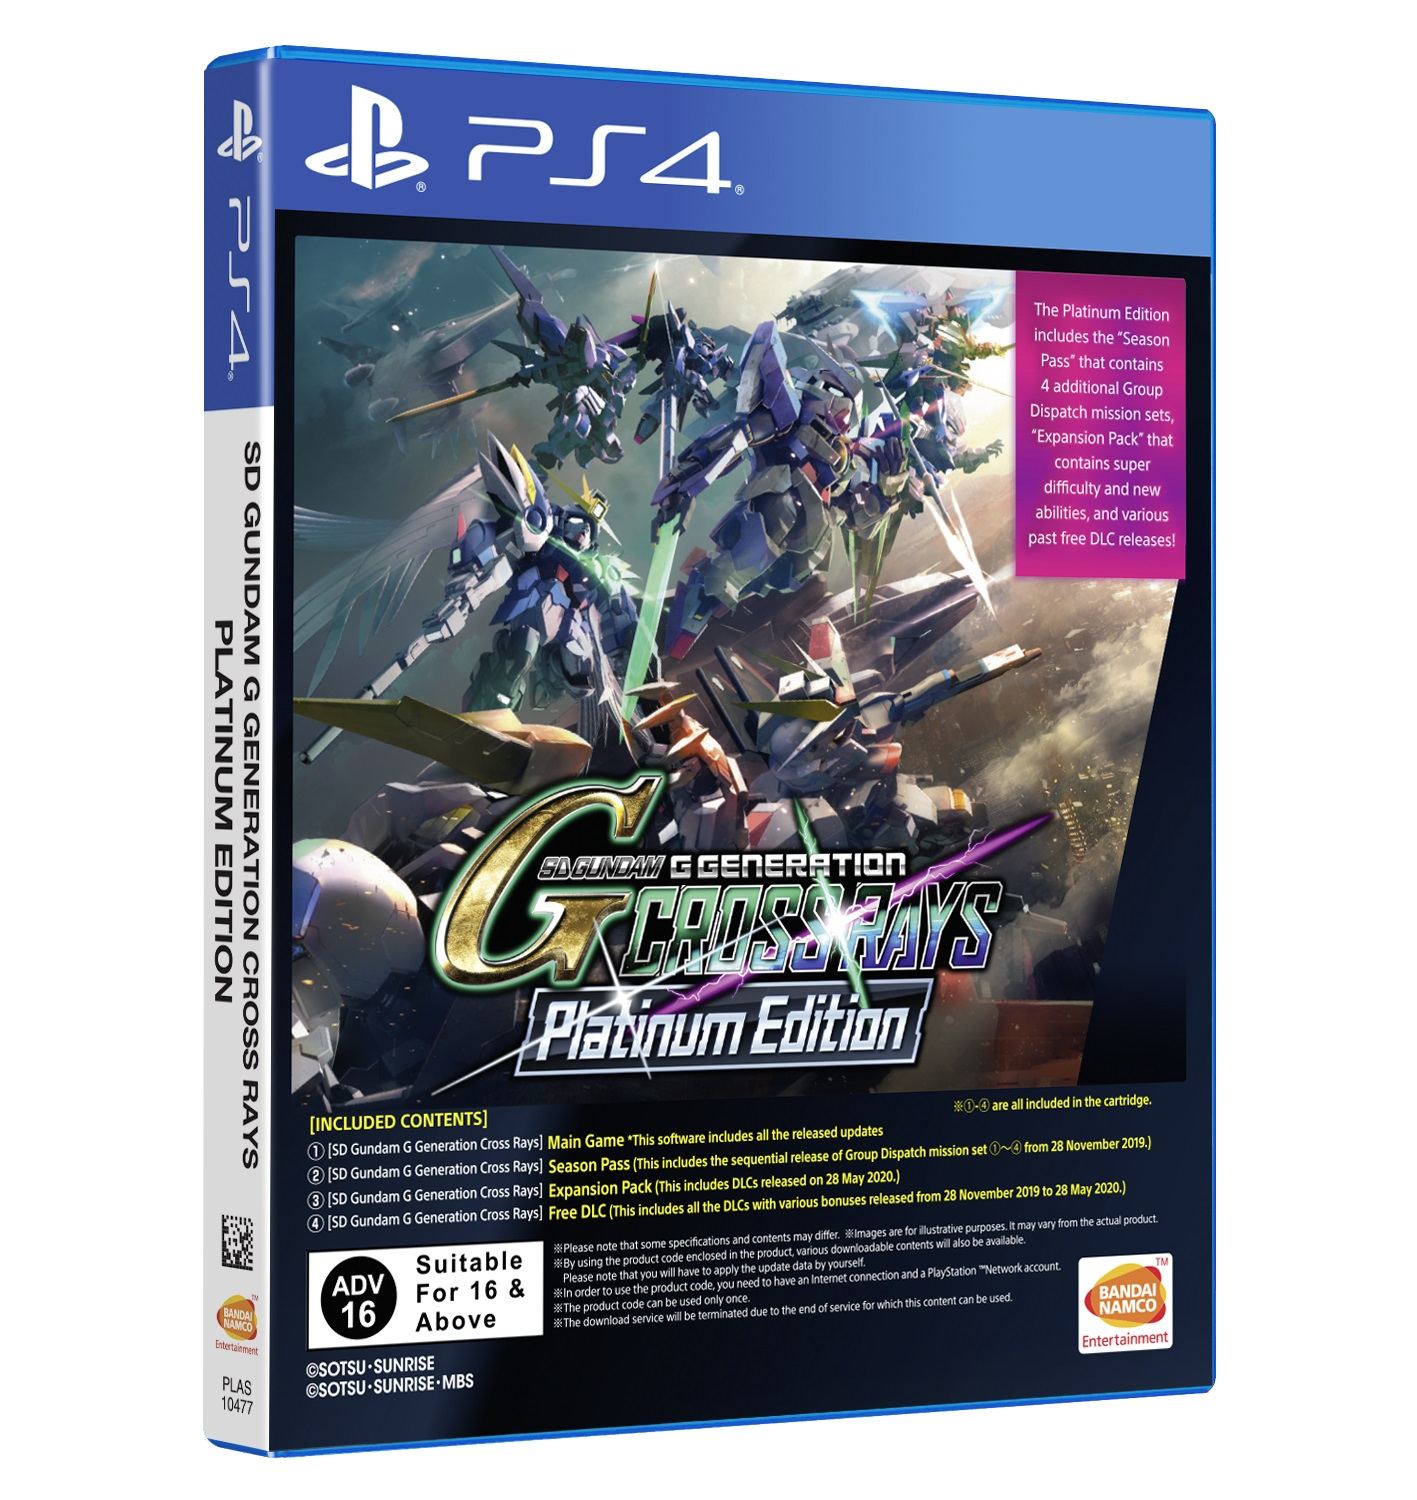 SD Gundam G Generation Cross Rays Edition] (English) DOUBLE for PlayStation